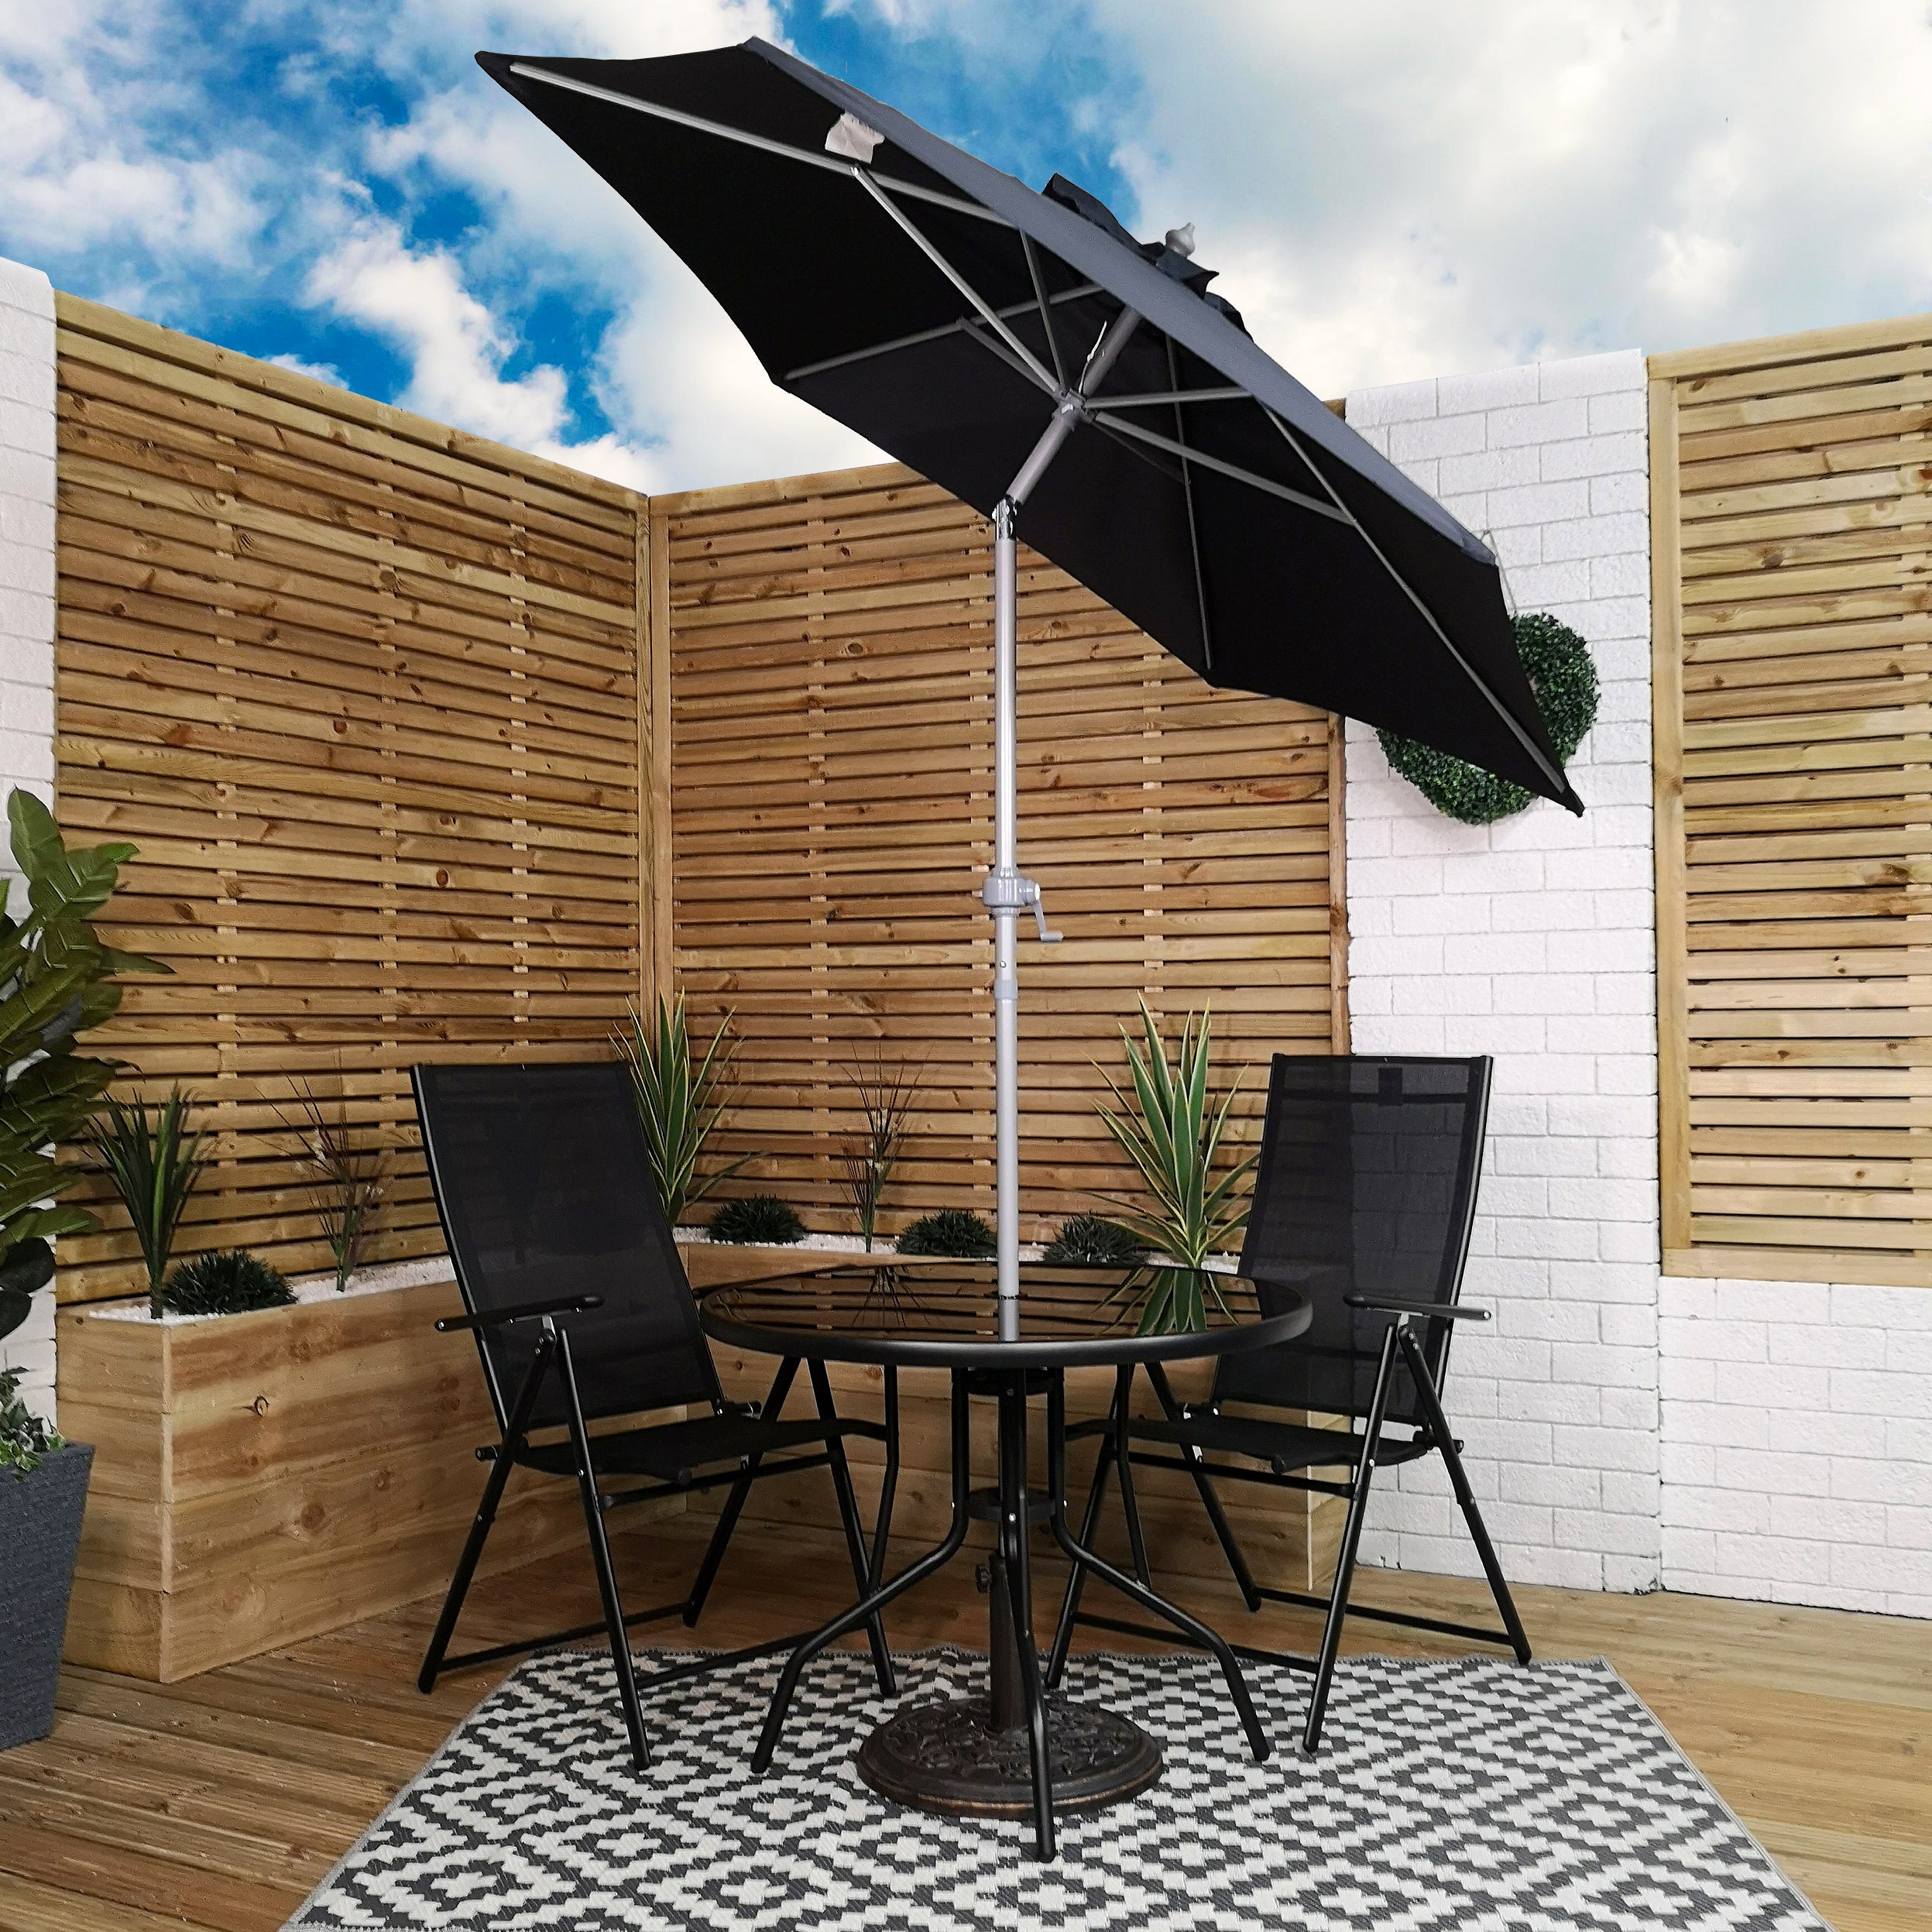 2m Lightweight Aluminium Garden Parasol with Crank & Tilt Mechanism in Black